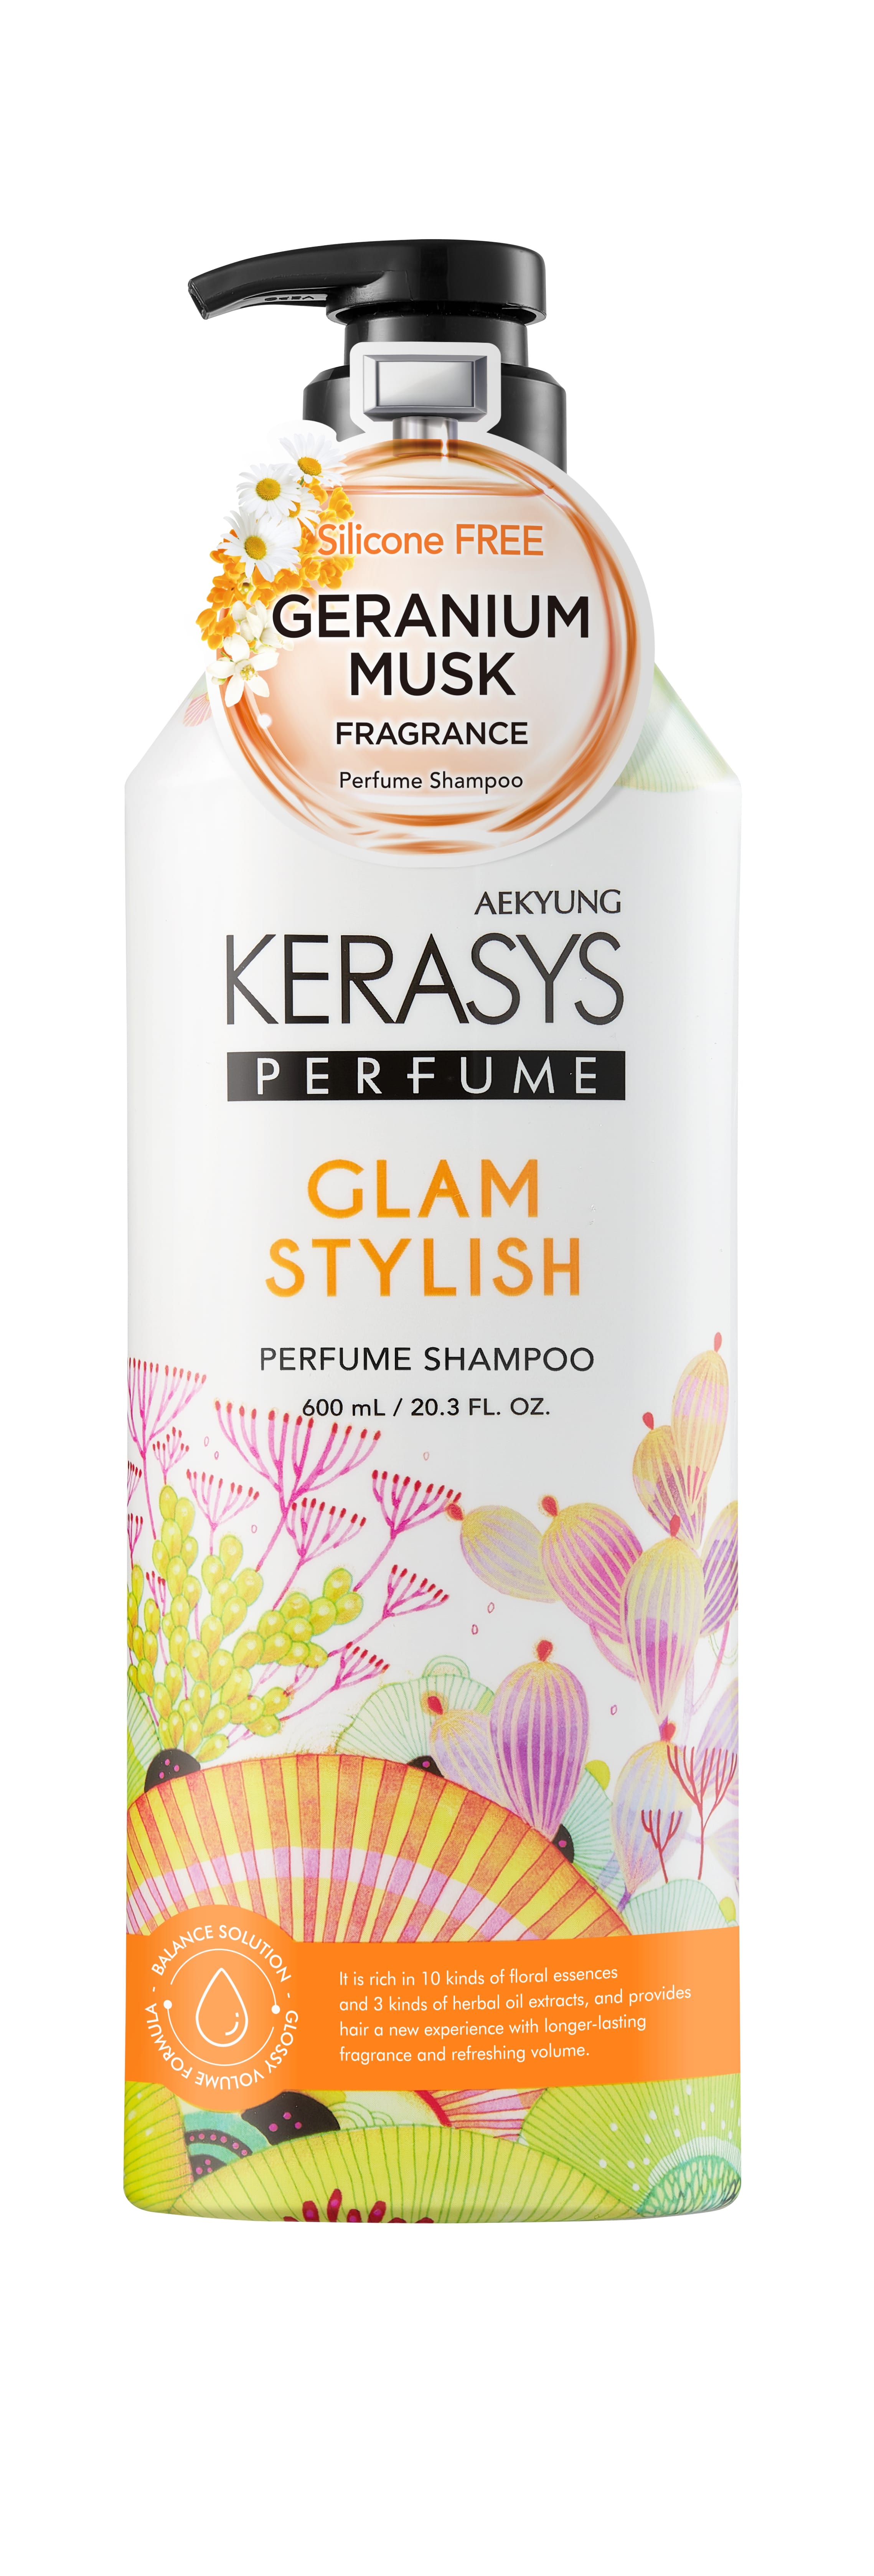 Aekyung Kerasys Parfumed Glam & Stylish Шампунь для волос парфюмированный Гламур 600 мл